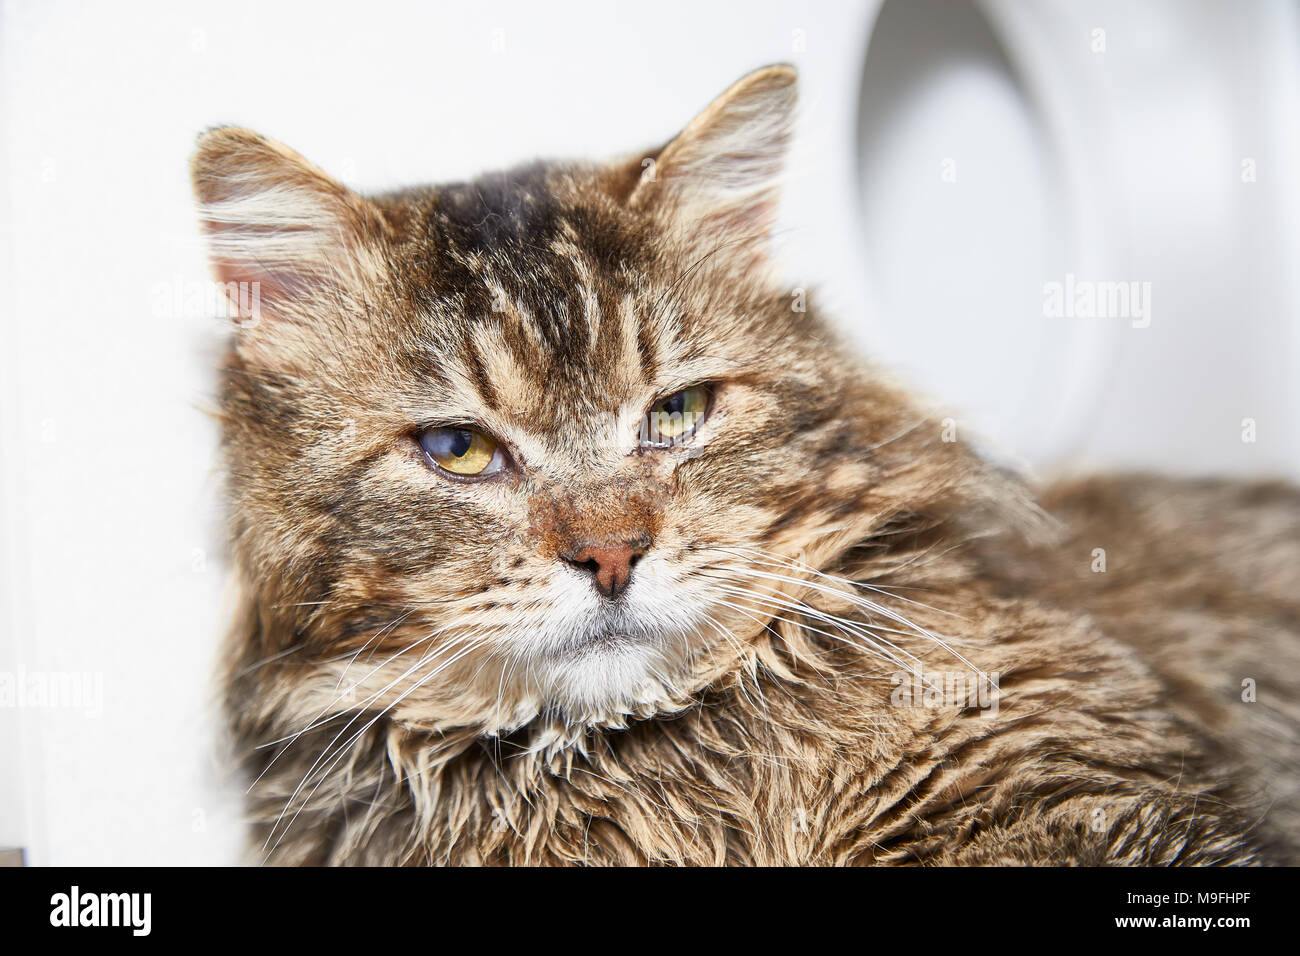 Dozy rough coated tabby cat raising its head to look sleepily at the camera indoors at home Stock Photo